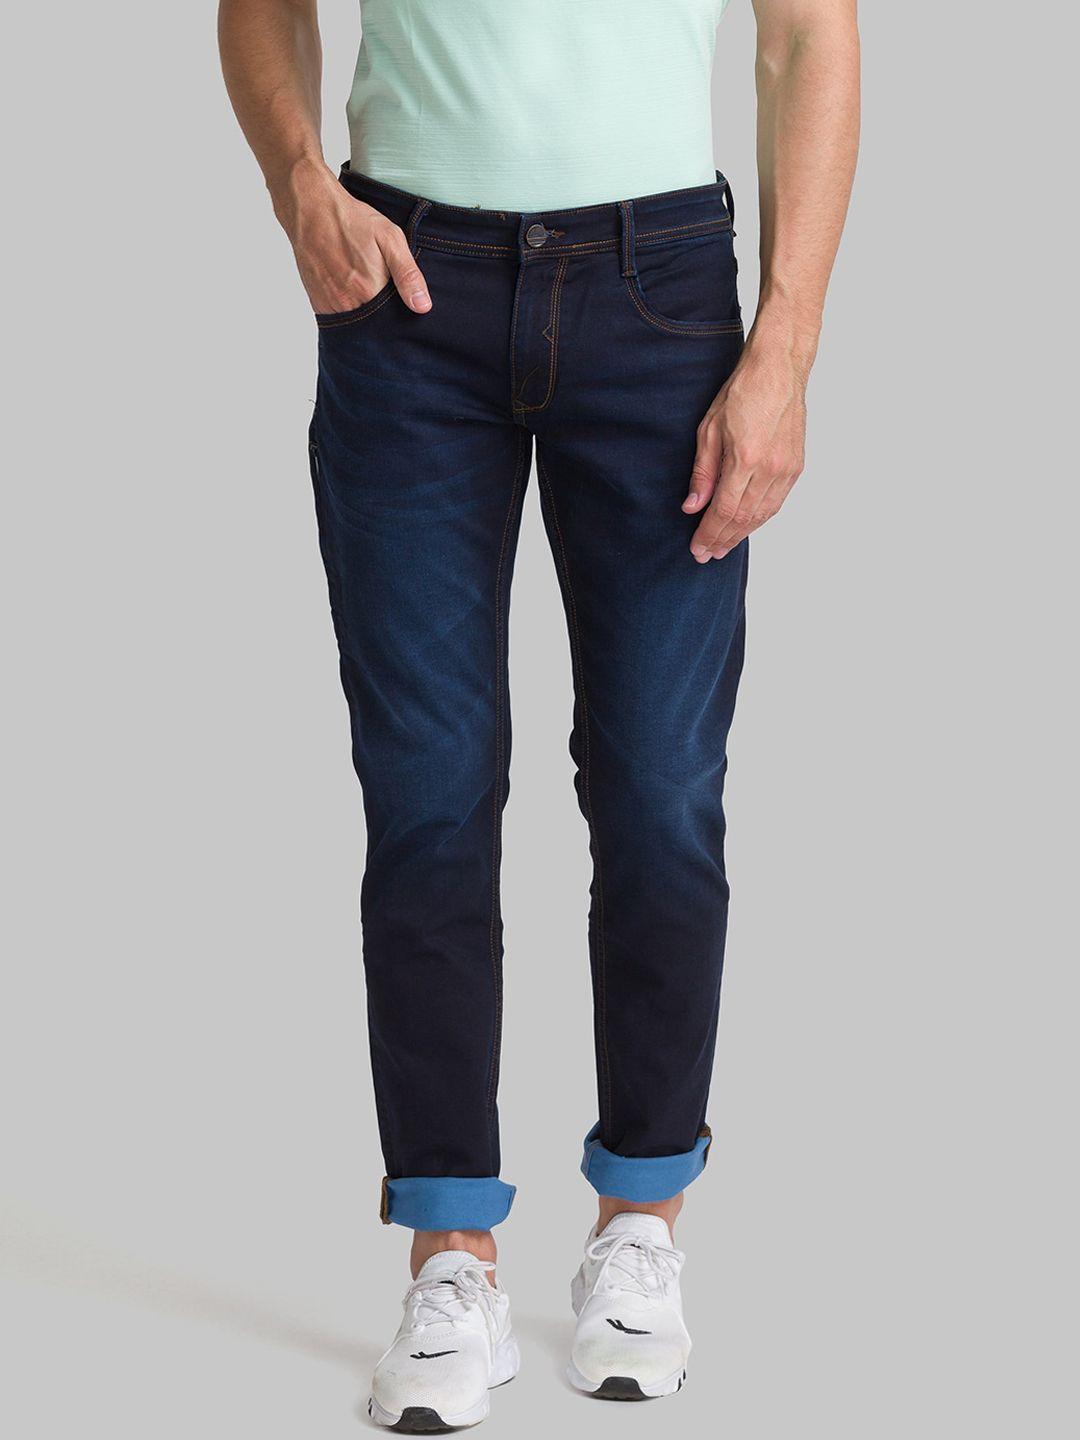 parx-men-black-skinny-fit-light-fade-stretchable-jeans